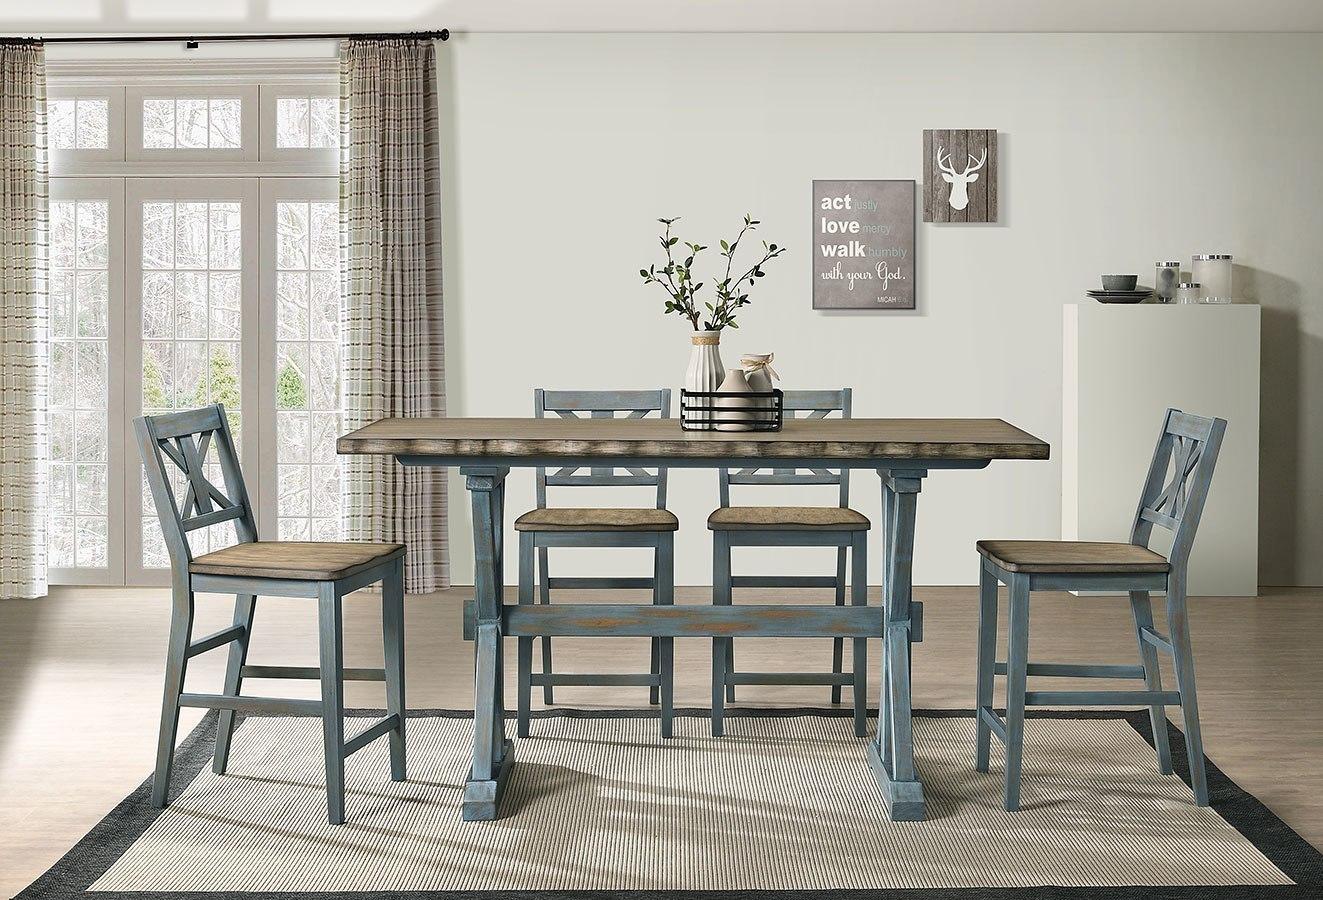 Transitional, Farmhouse Counter Table Set SUMMERVILLE II 5800-530-Set-5 5800-530-5800-540-Set-5 in Blue, Beige 